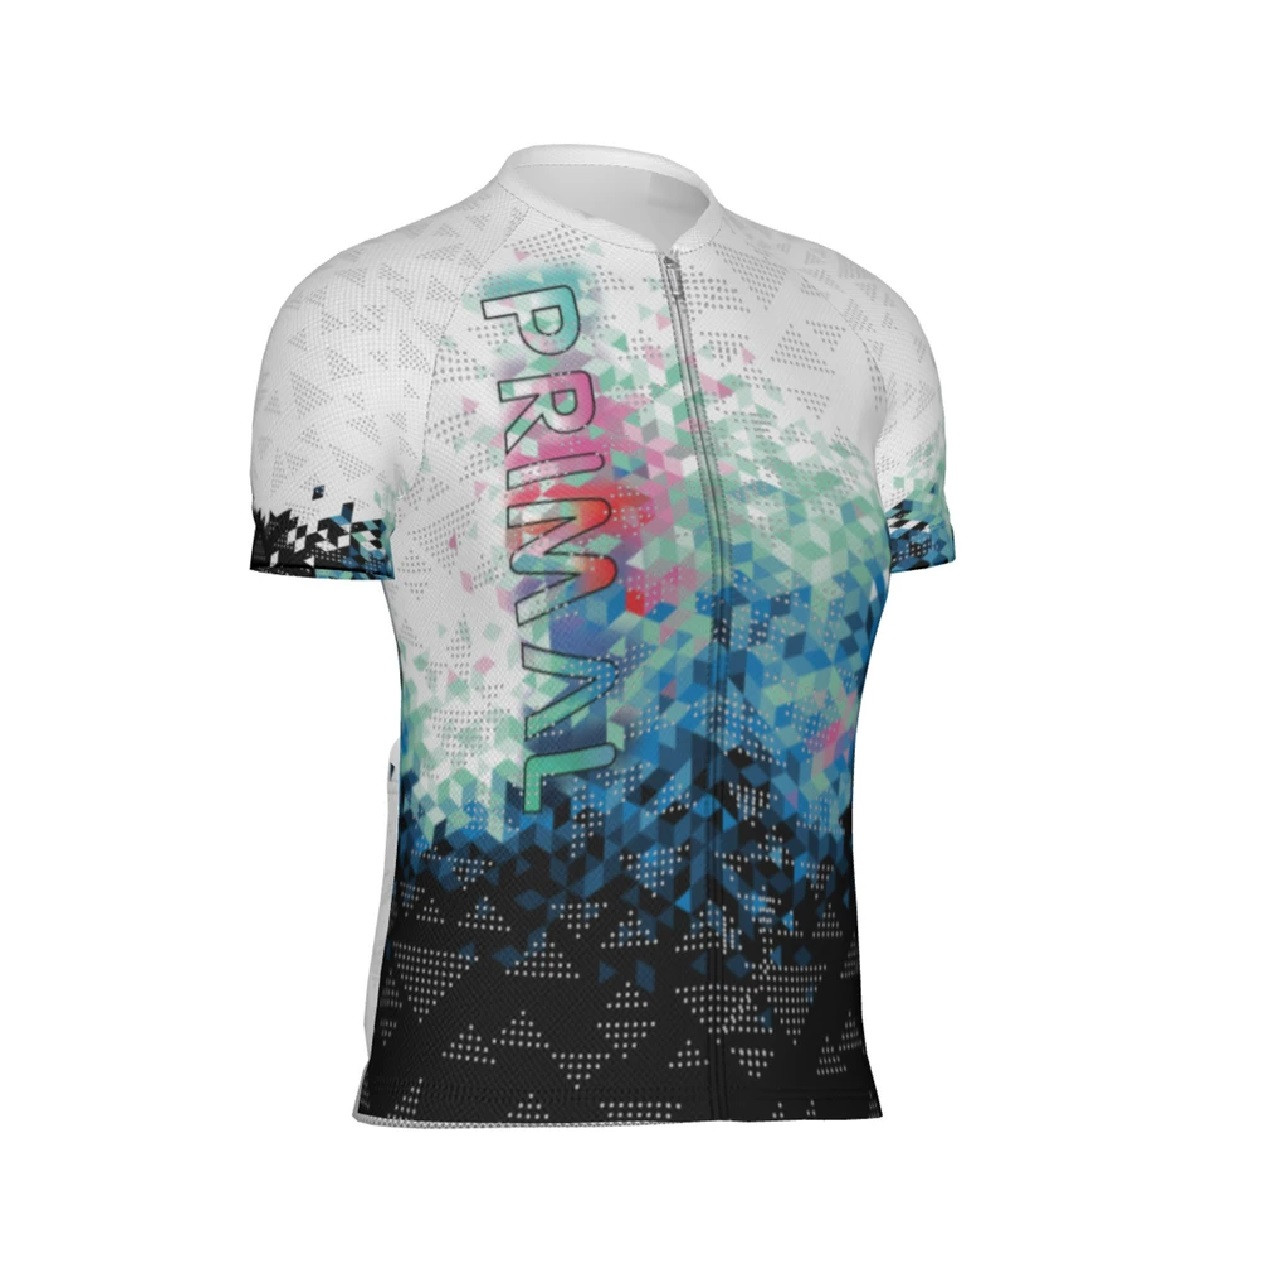 Primal Wear Isomatrix Reflective Men's Cycling Jersey $120